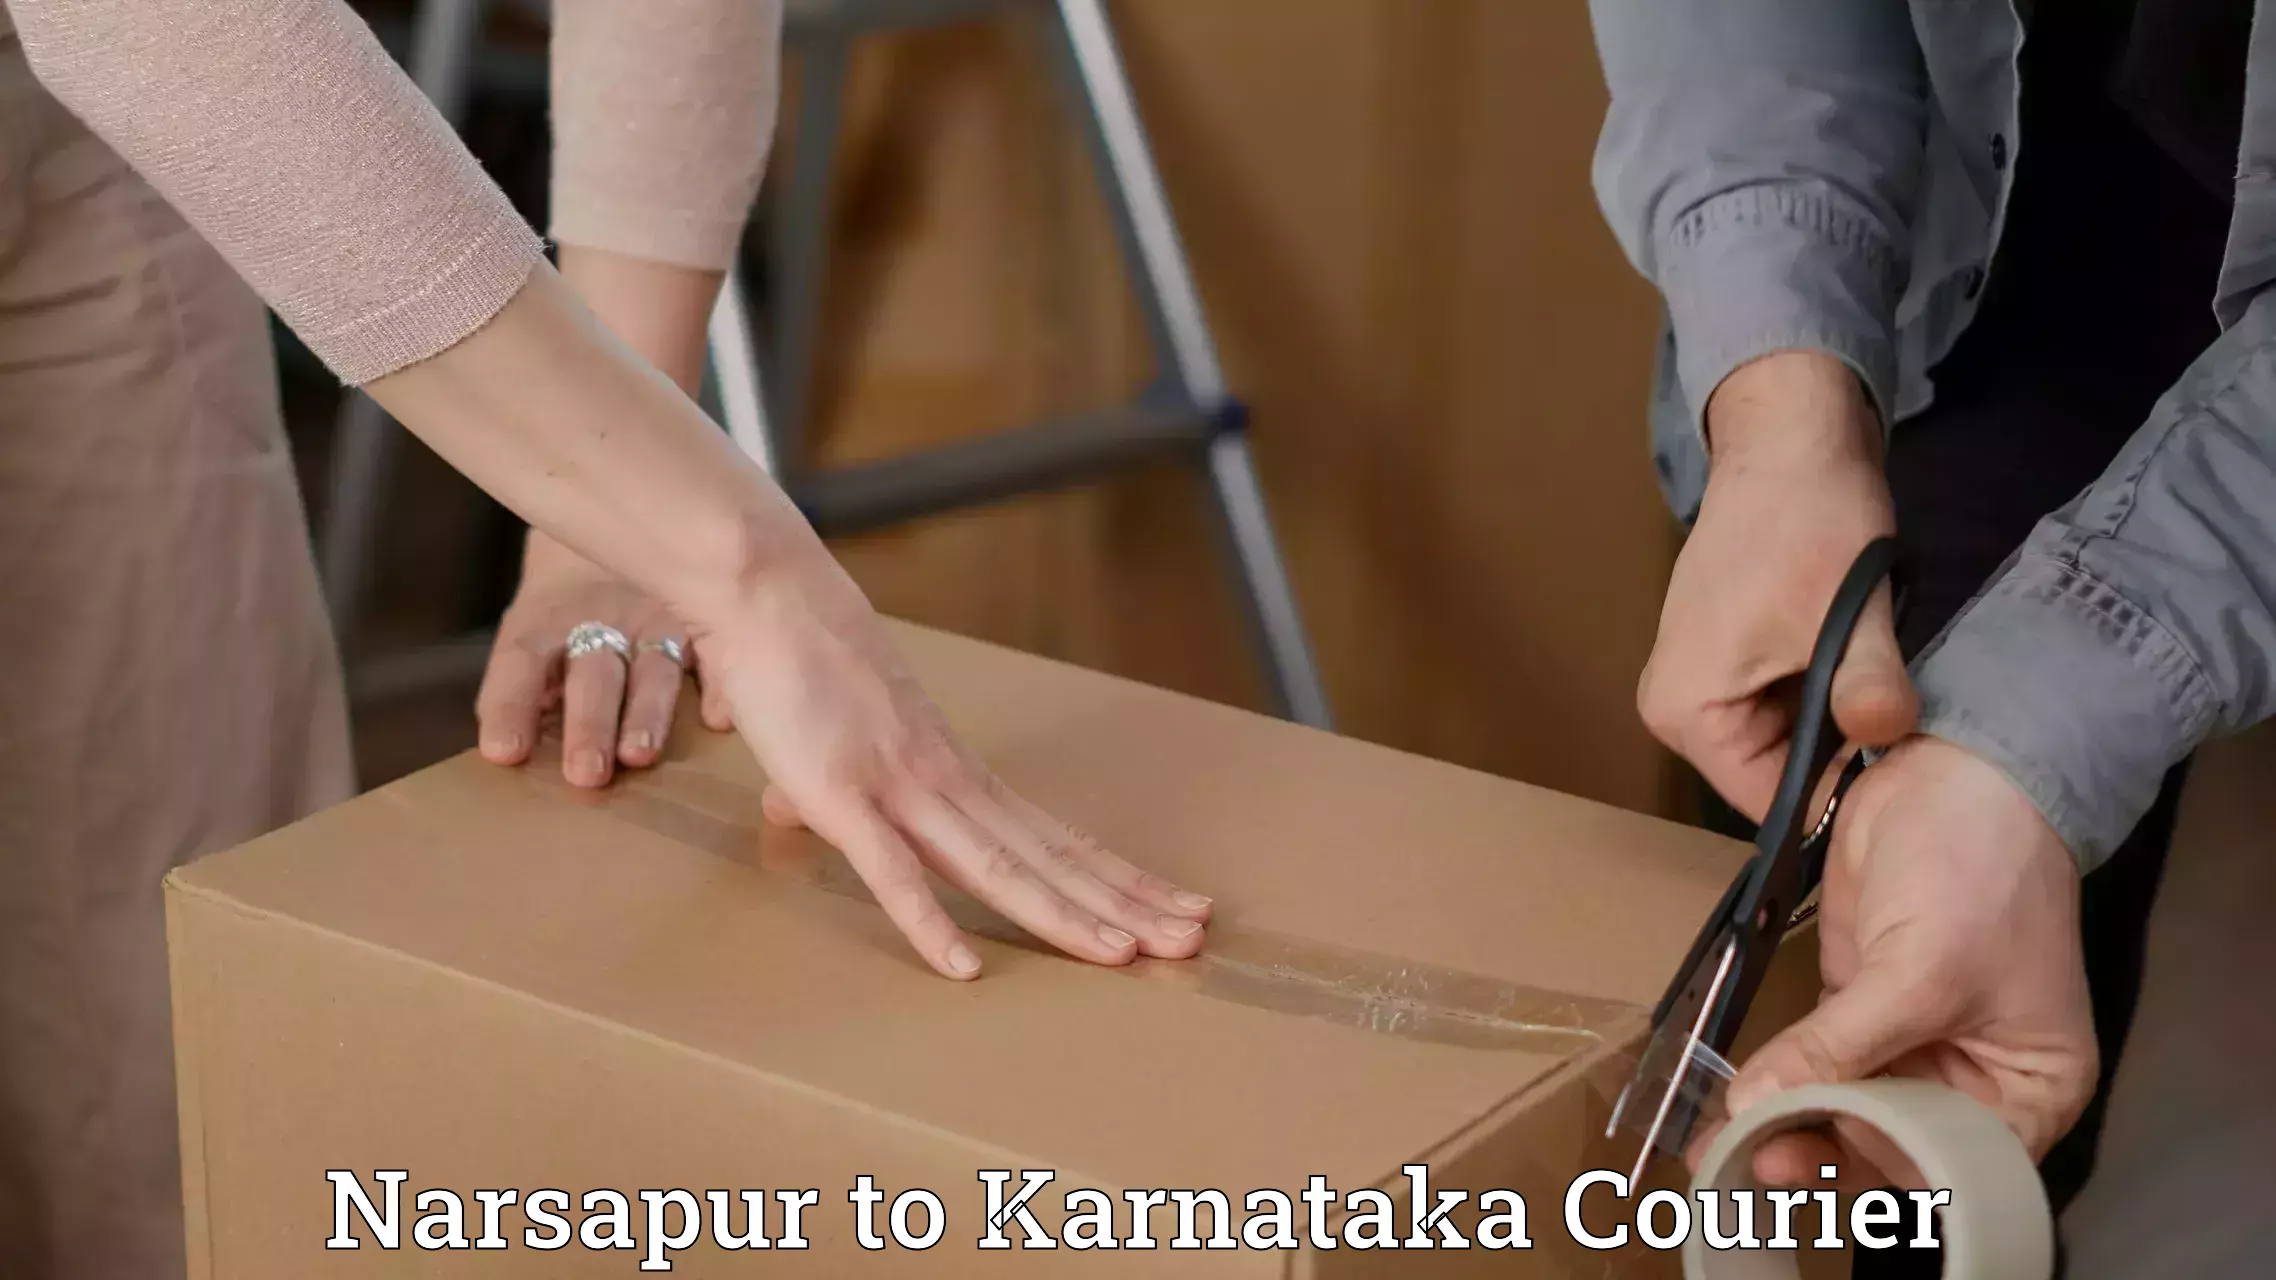 Nationwide delivery network Narsapur to Karnataka